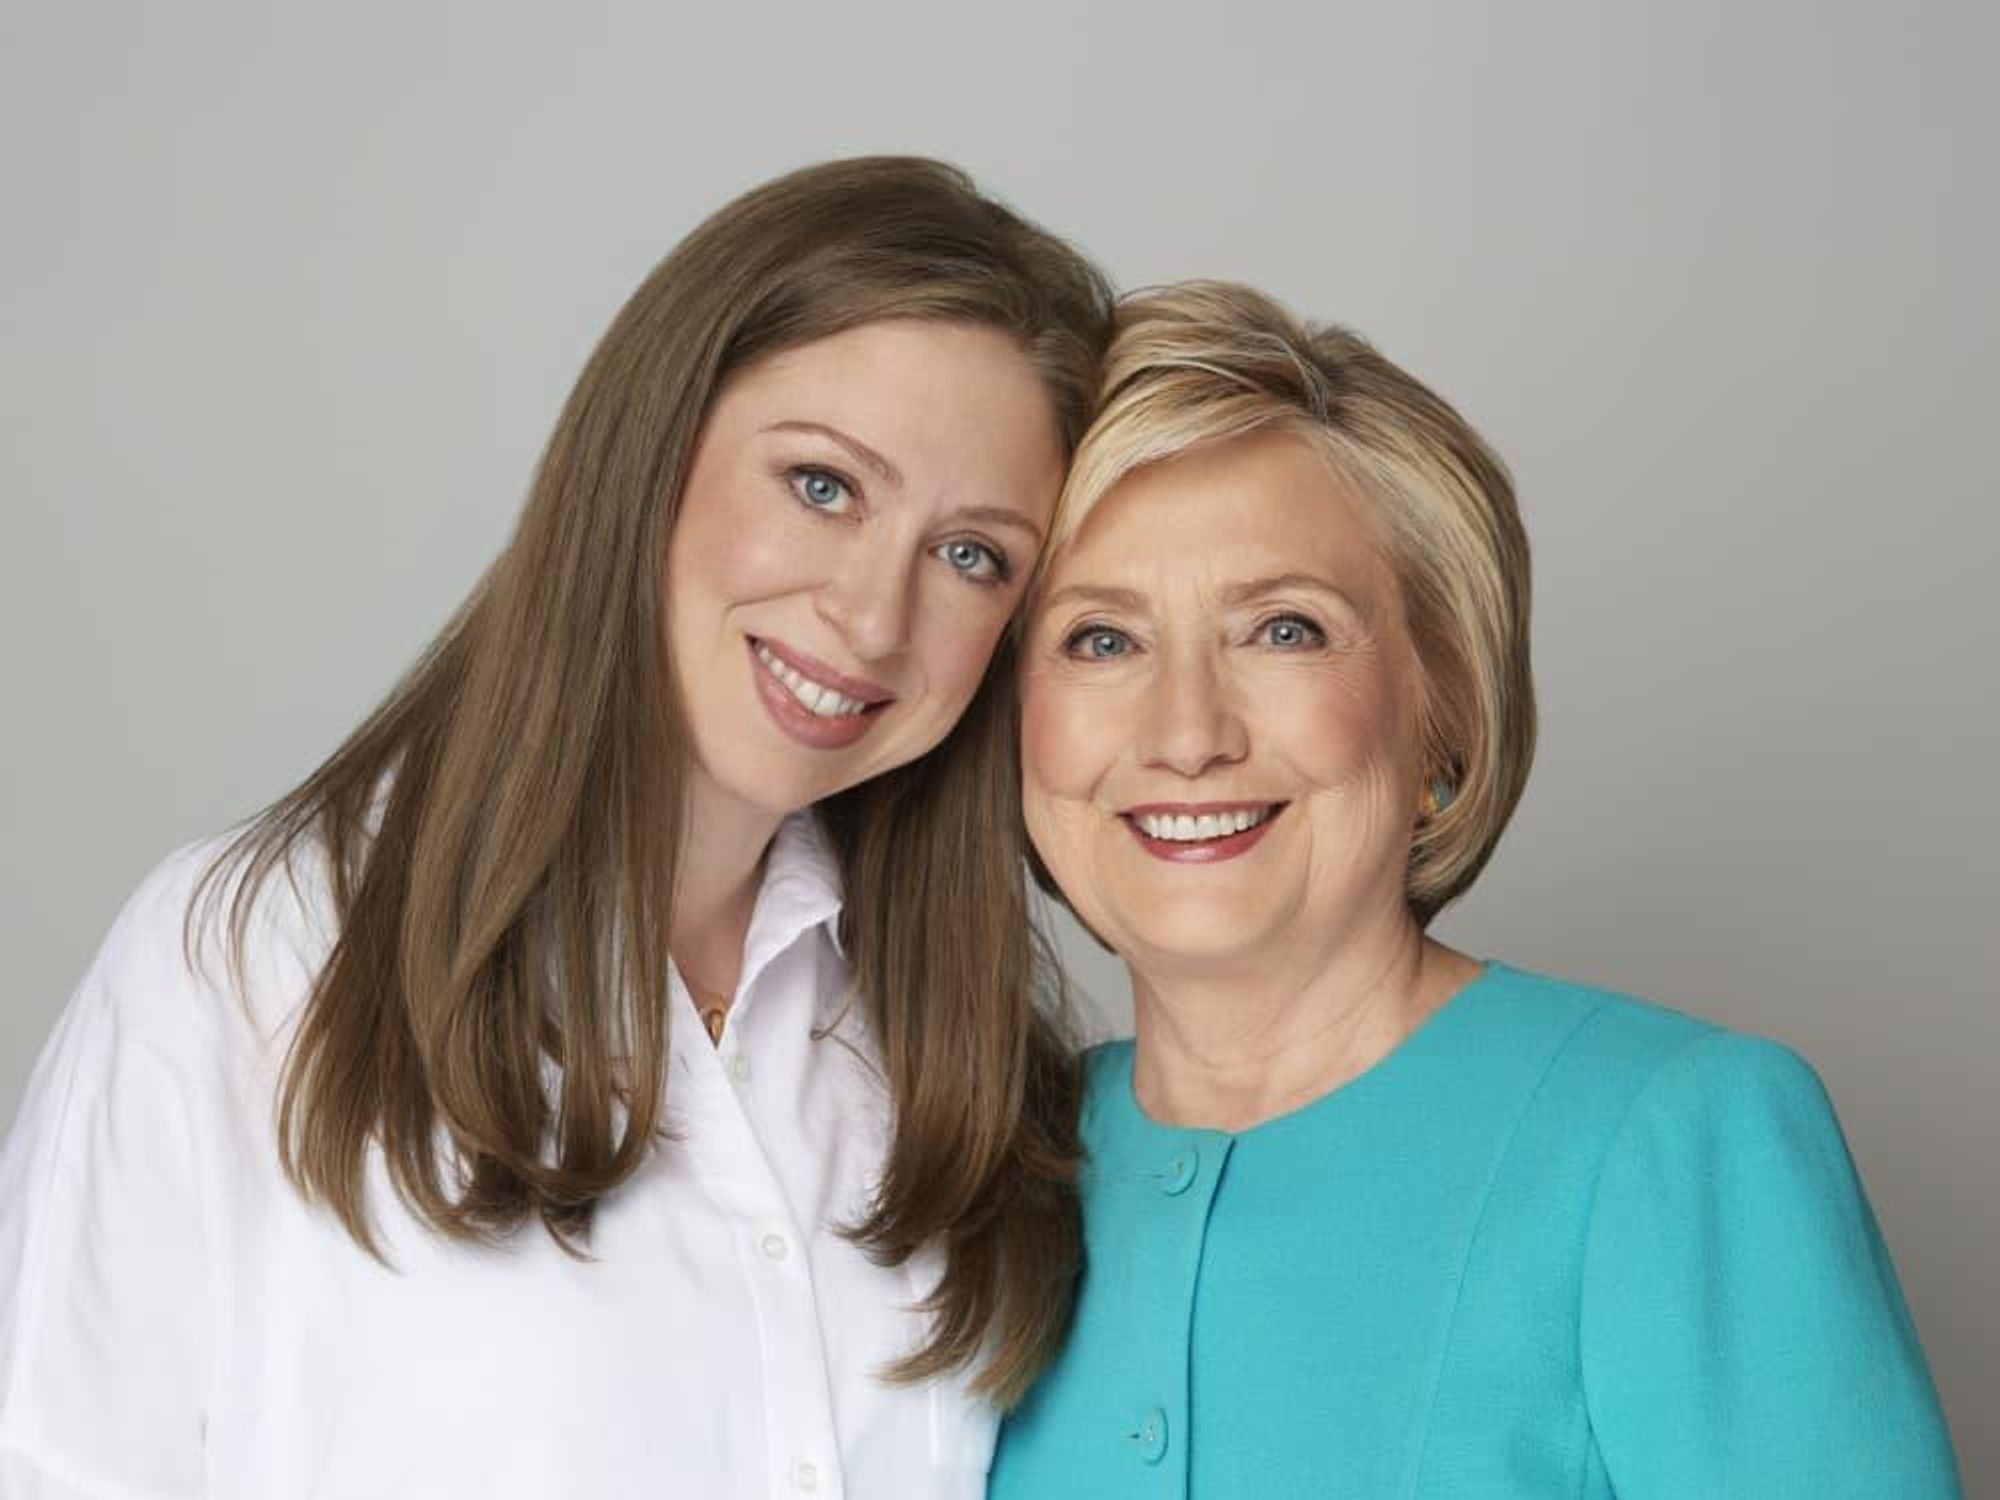 Chelsea Clinton and Hillary Rodham Clinton